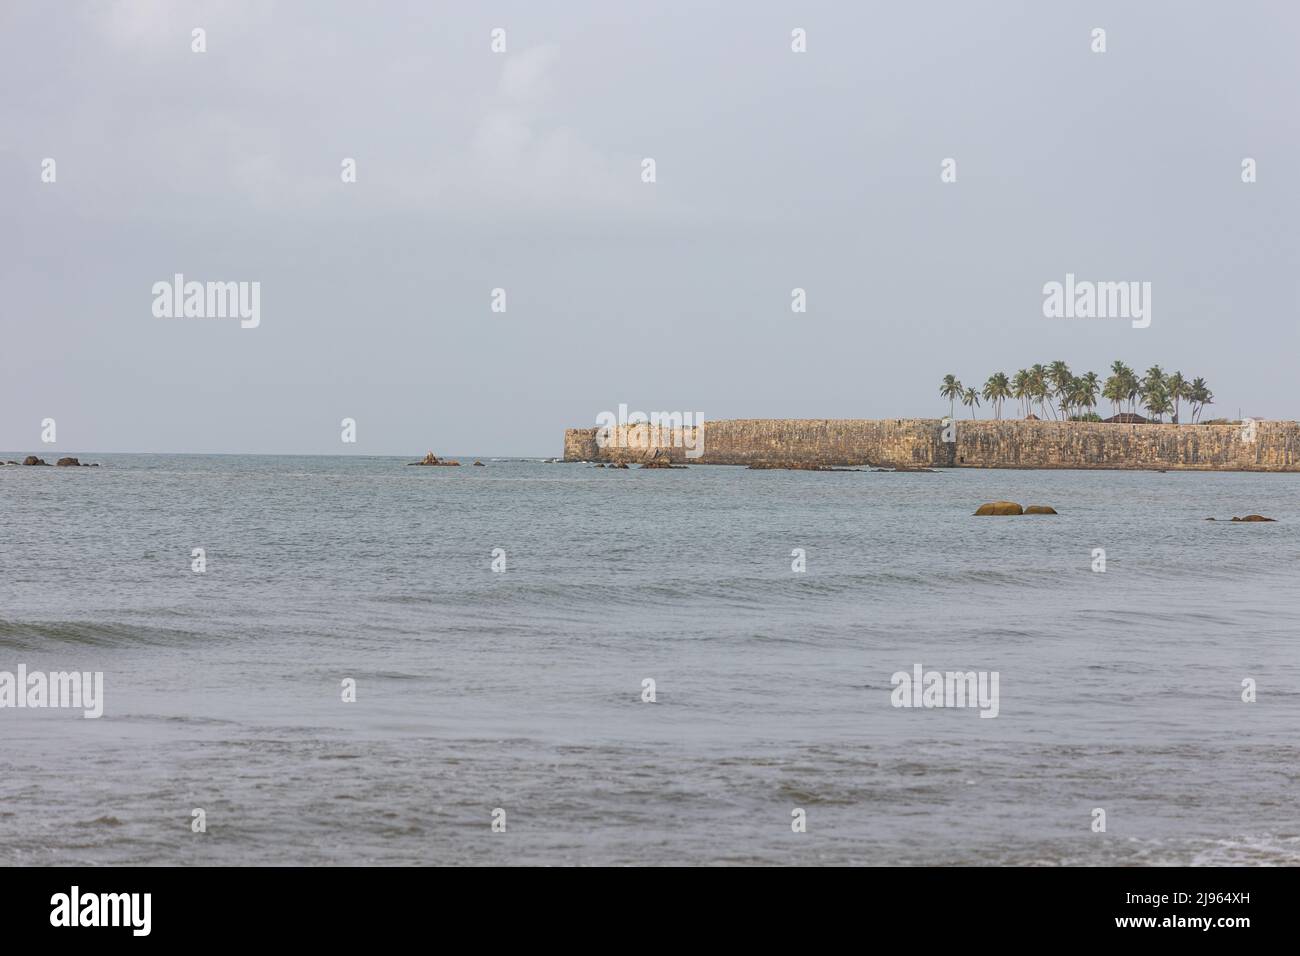 View of the massive Sindhudurg Fort stretching into the Arabian Sea as seen from Wayari Bhutnath Beach, Malvan, Maharashtra, India Stock Photo